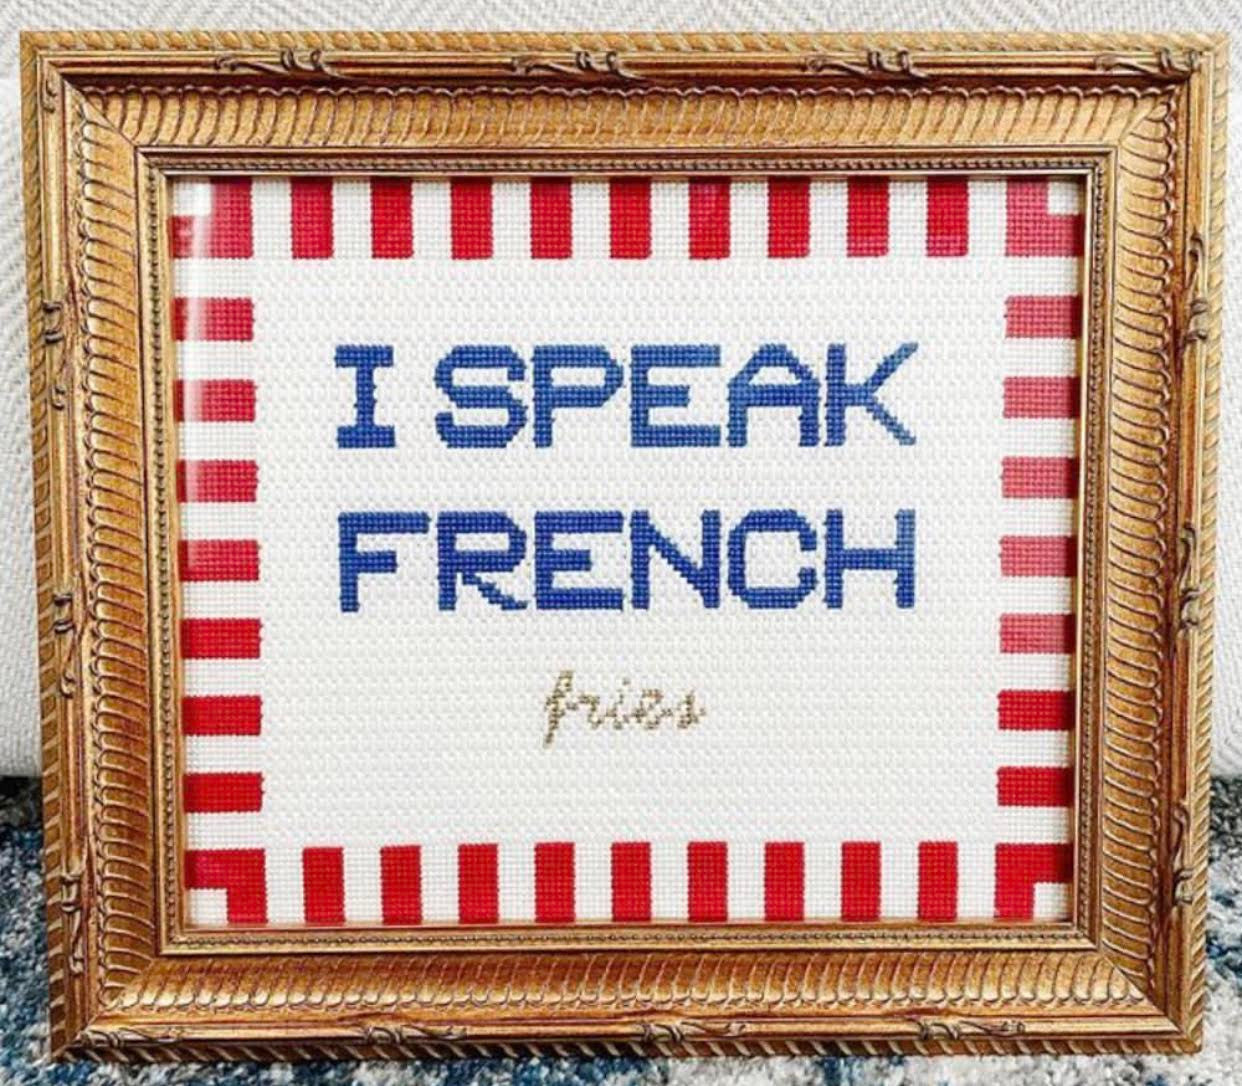 Silver Stitch I Speak French Fries